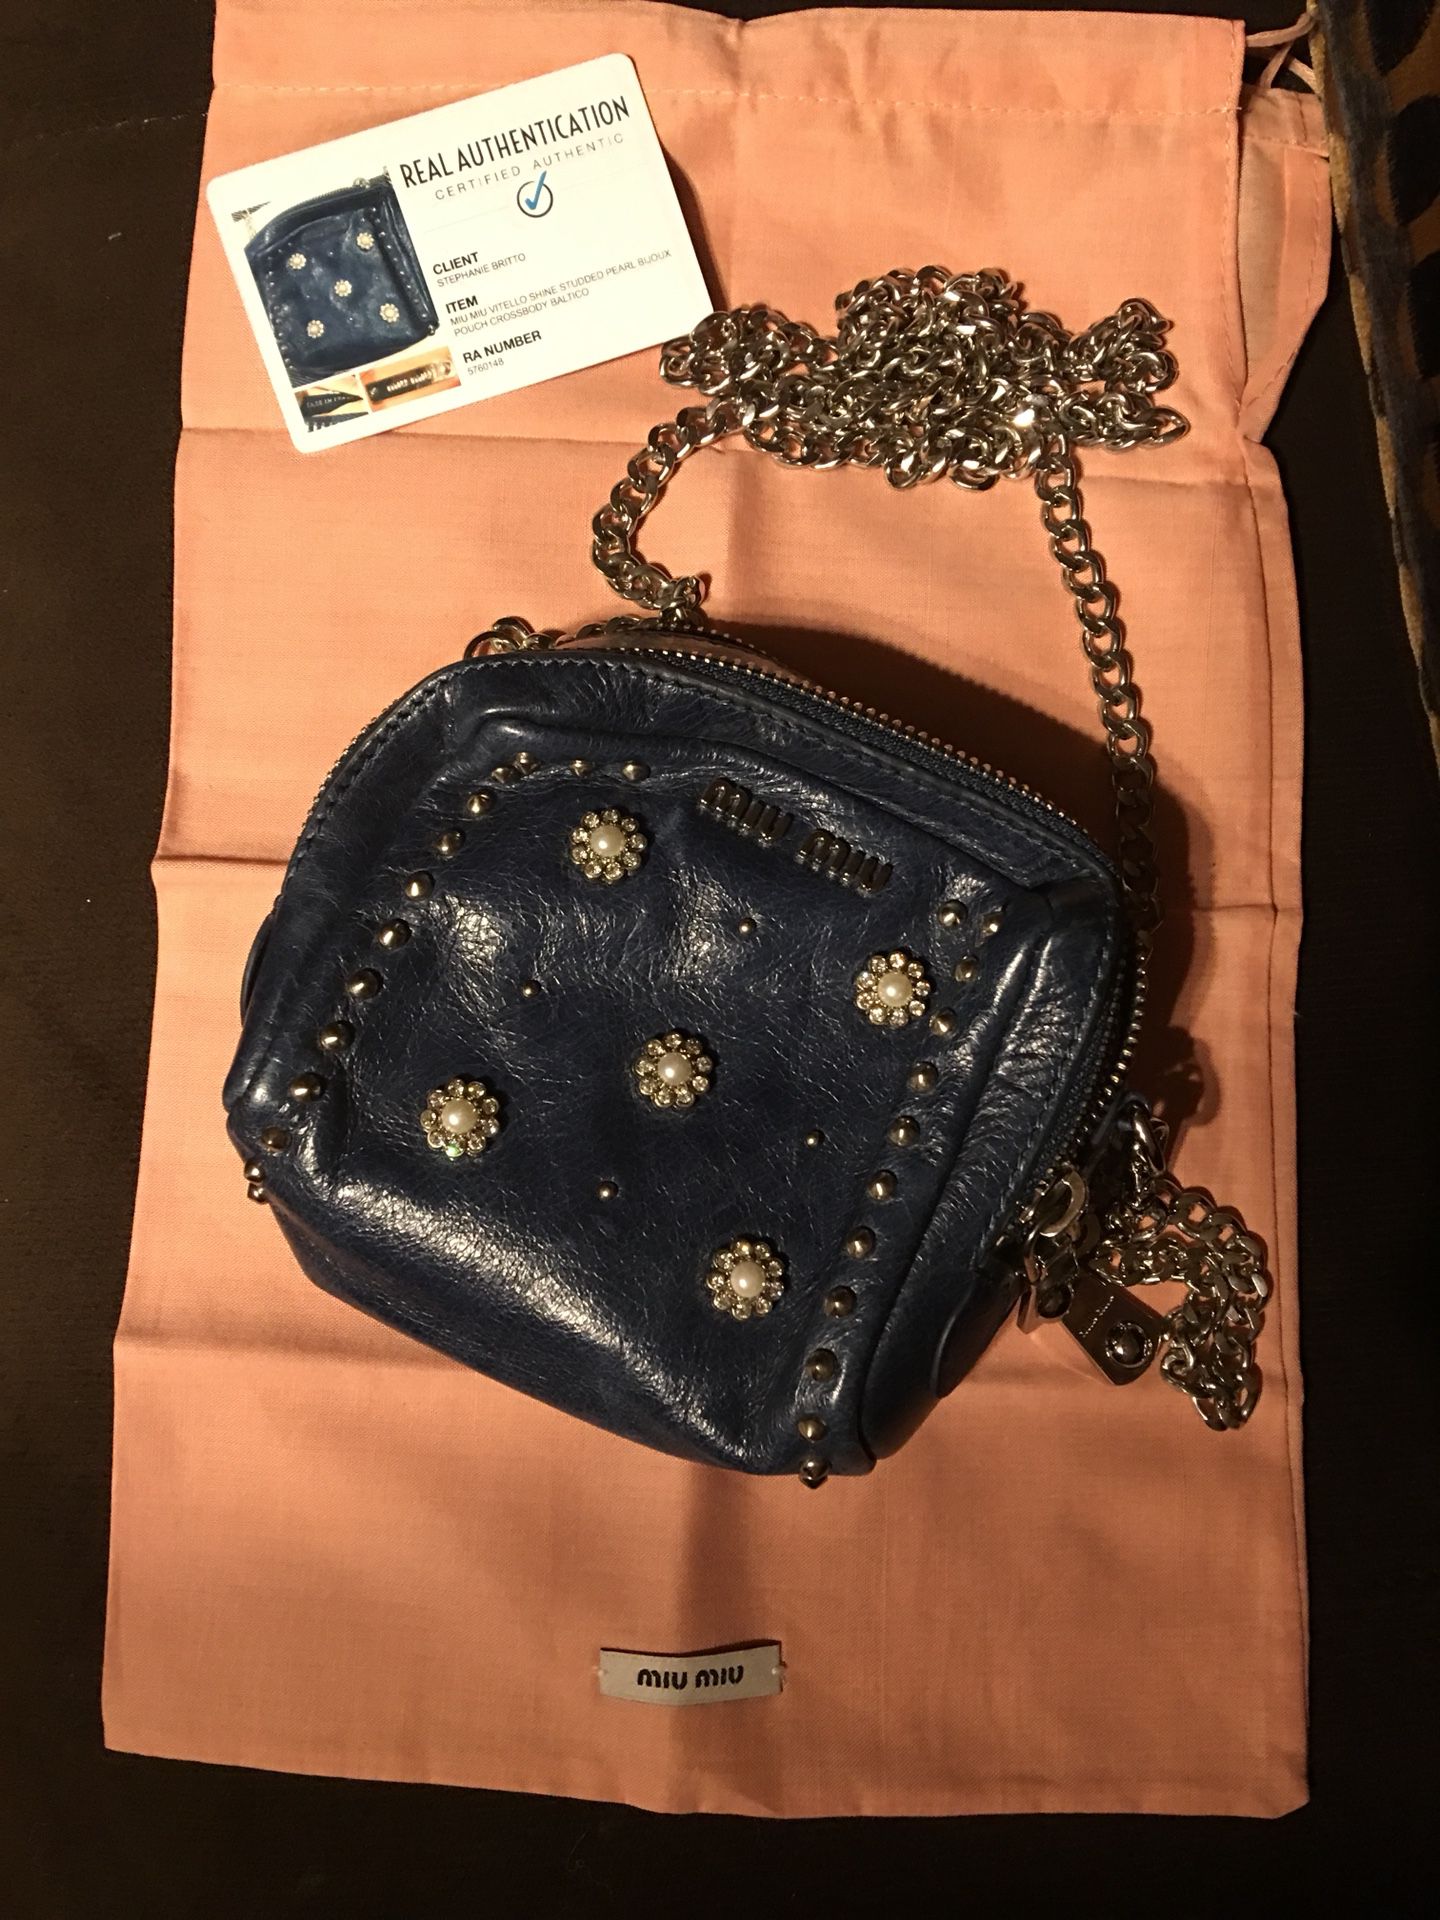 Miu Miu Authenticated Leather Handbag